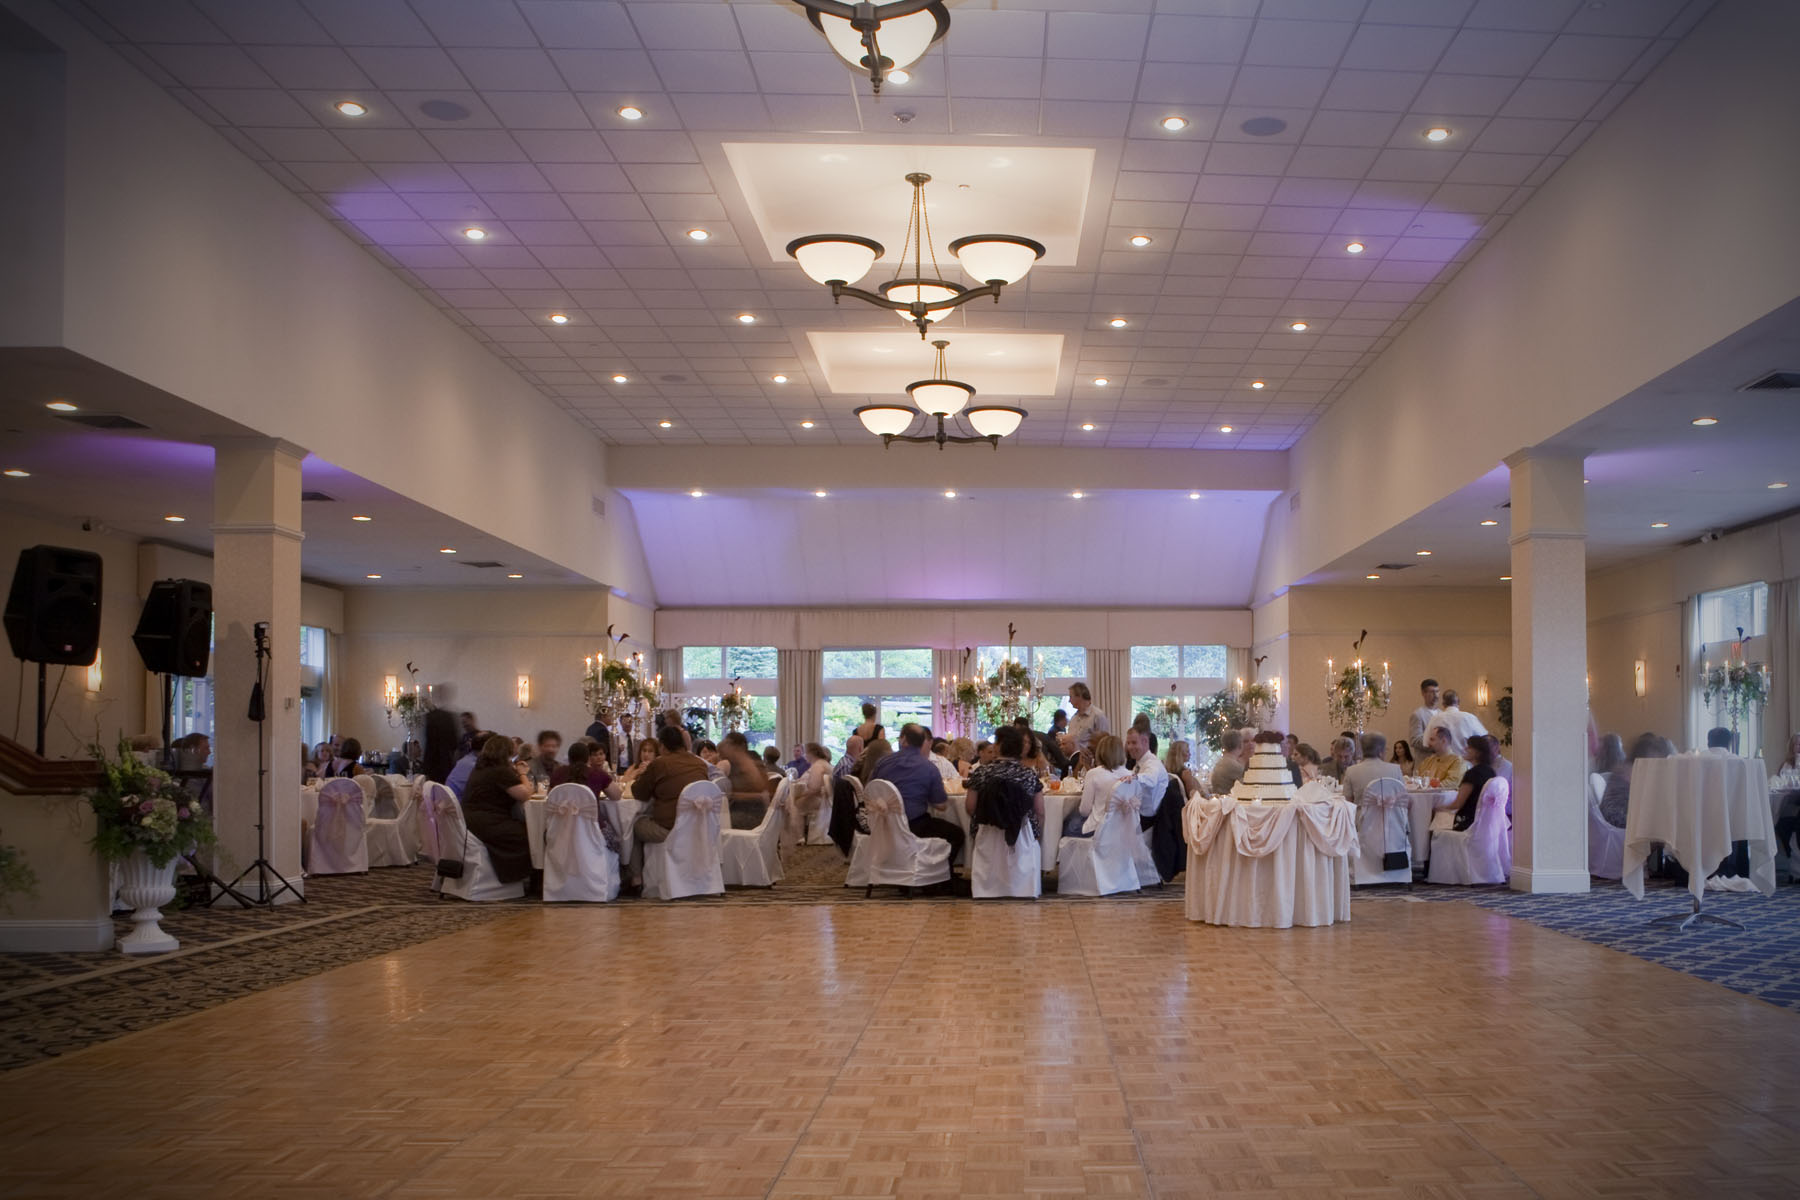 Reception ballroom for Atkinson resort and country club wedding